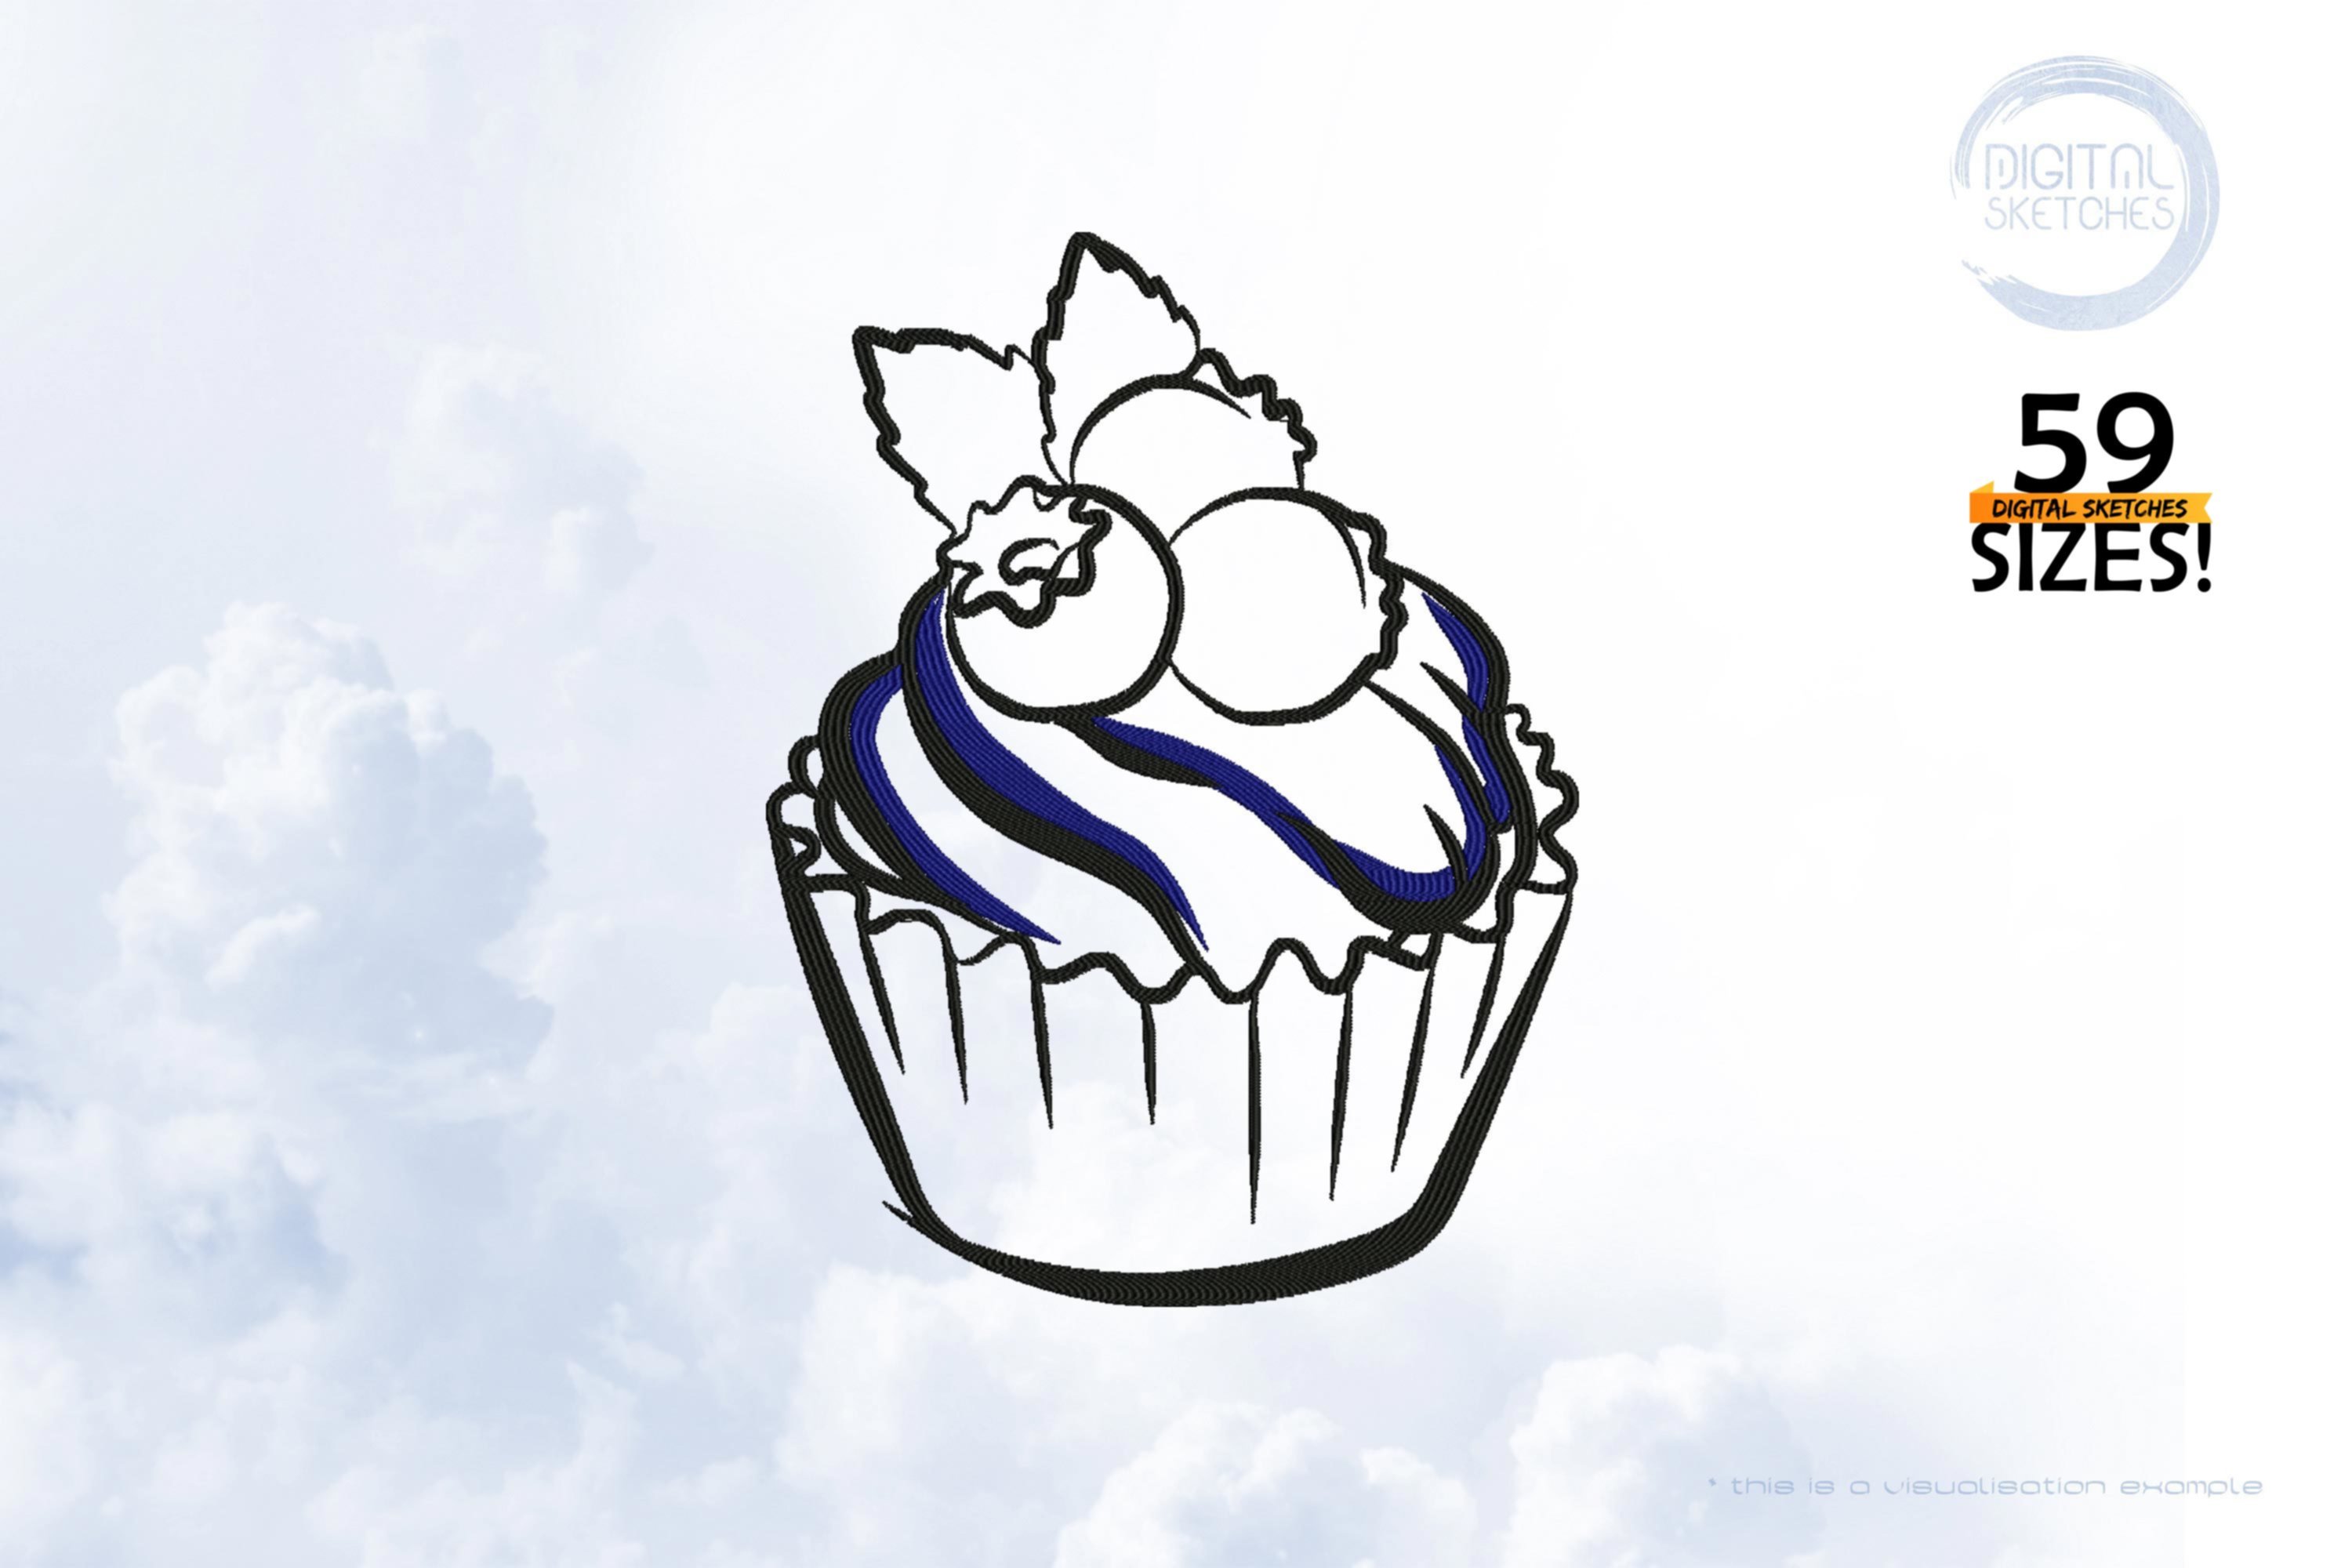 Blueberry Cupcake 